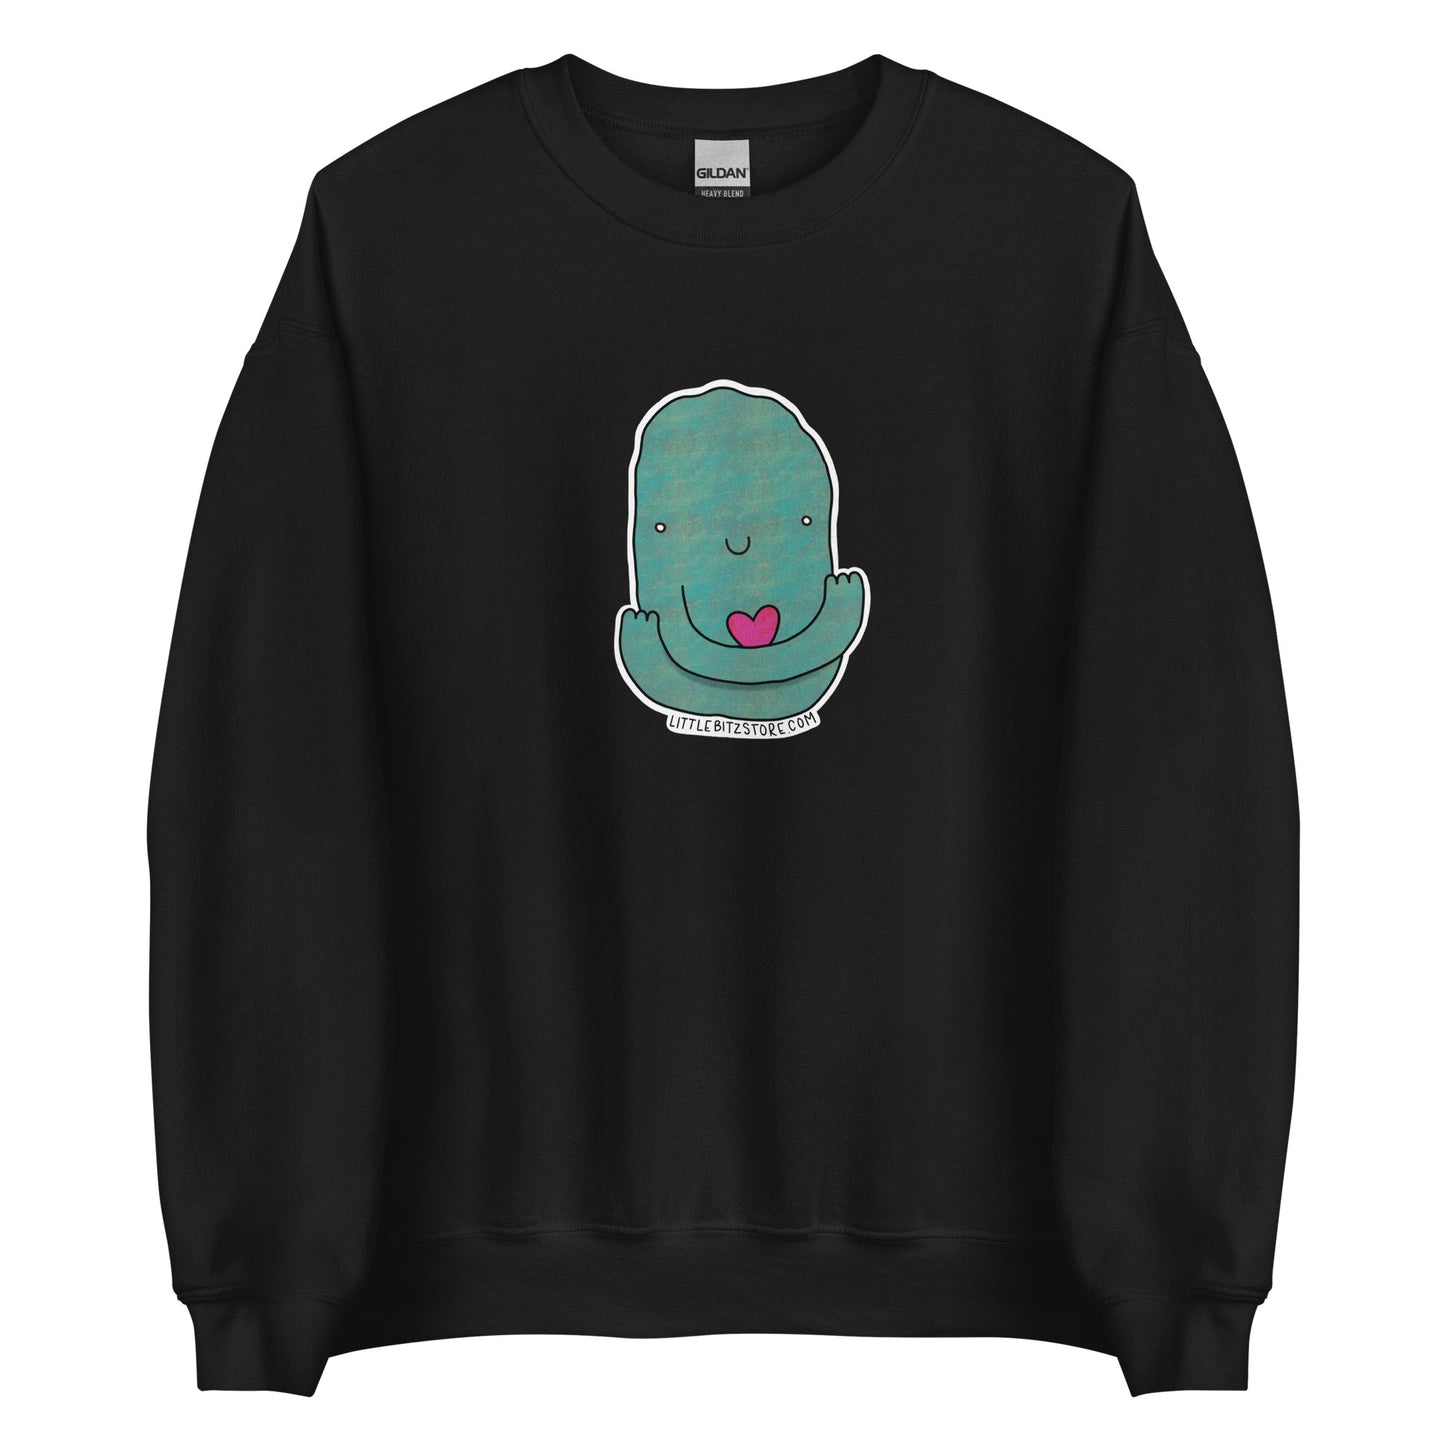 Self Love Blob - Unisex Sweatshirt